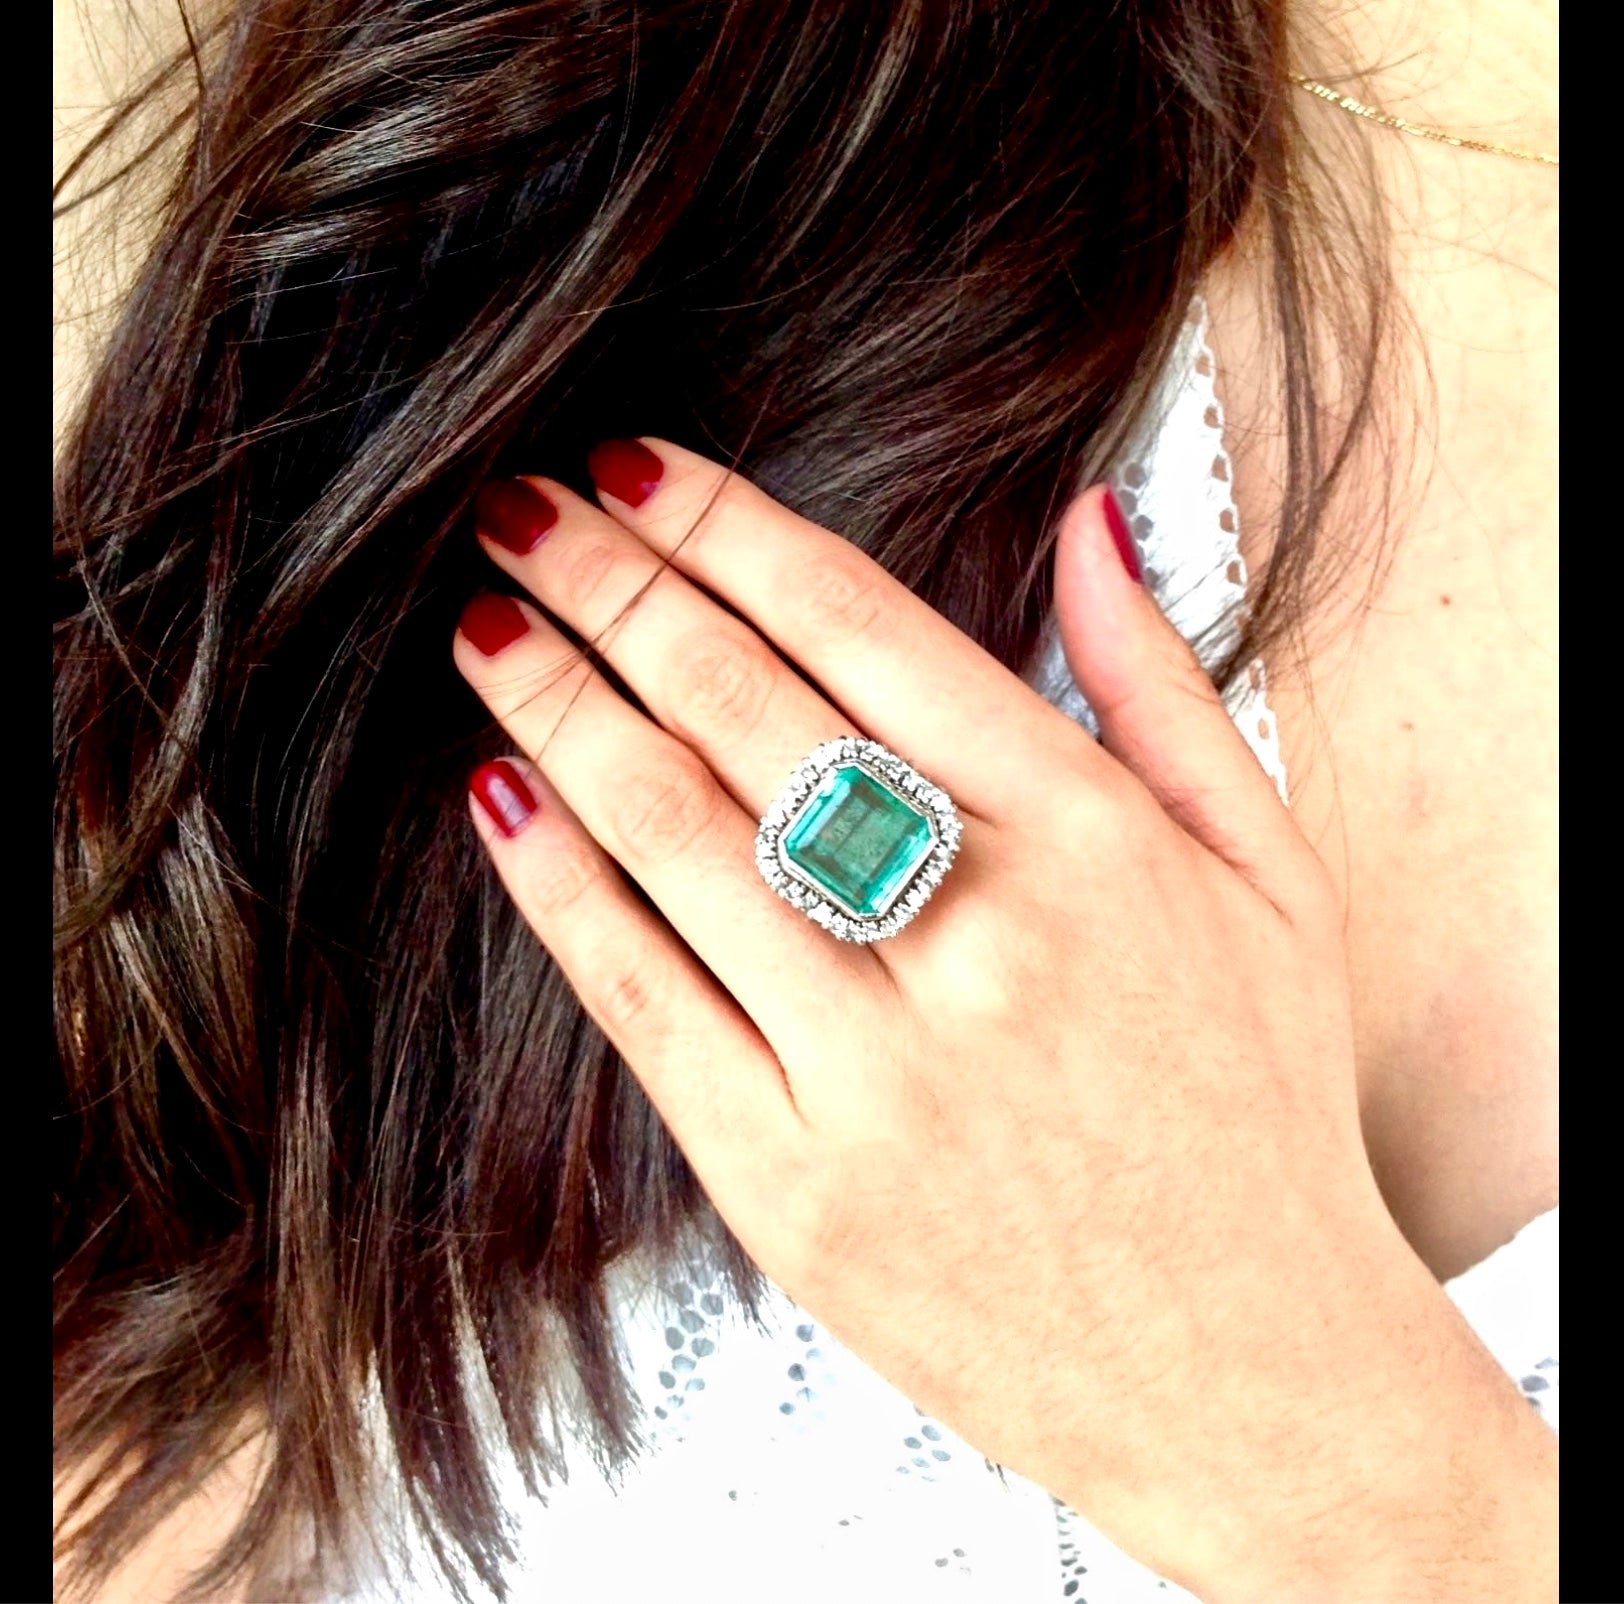 HBIC 15-carat Emerald Cut Ring – The Jewel Parlor